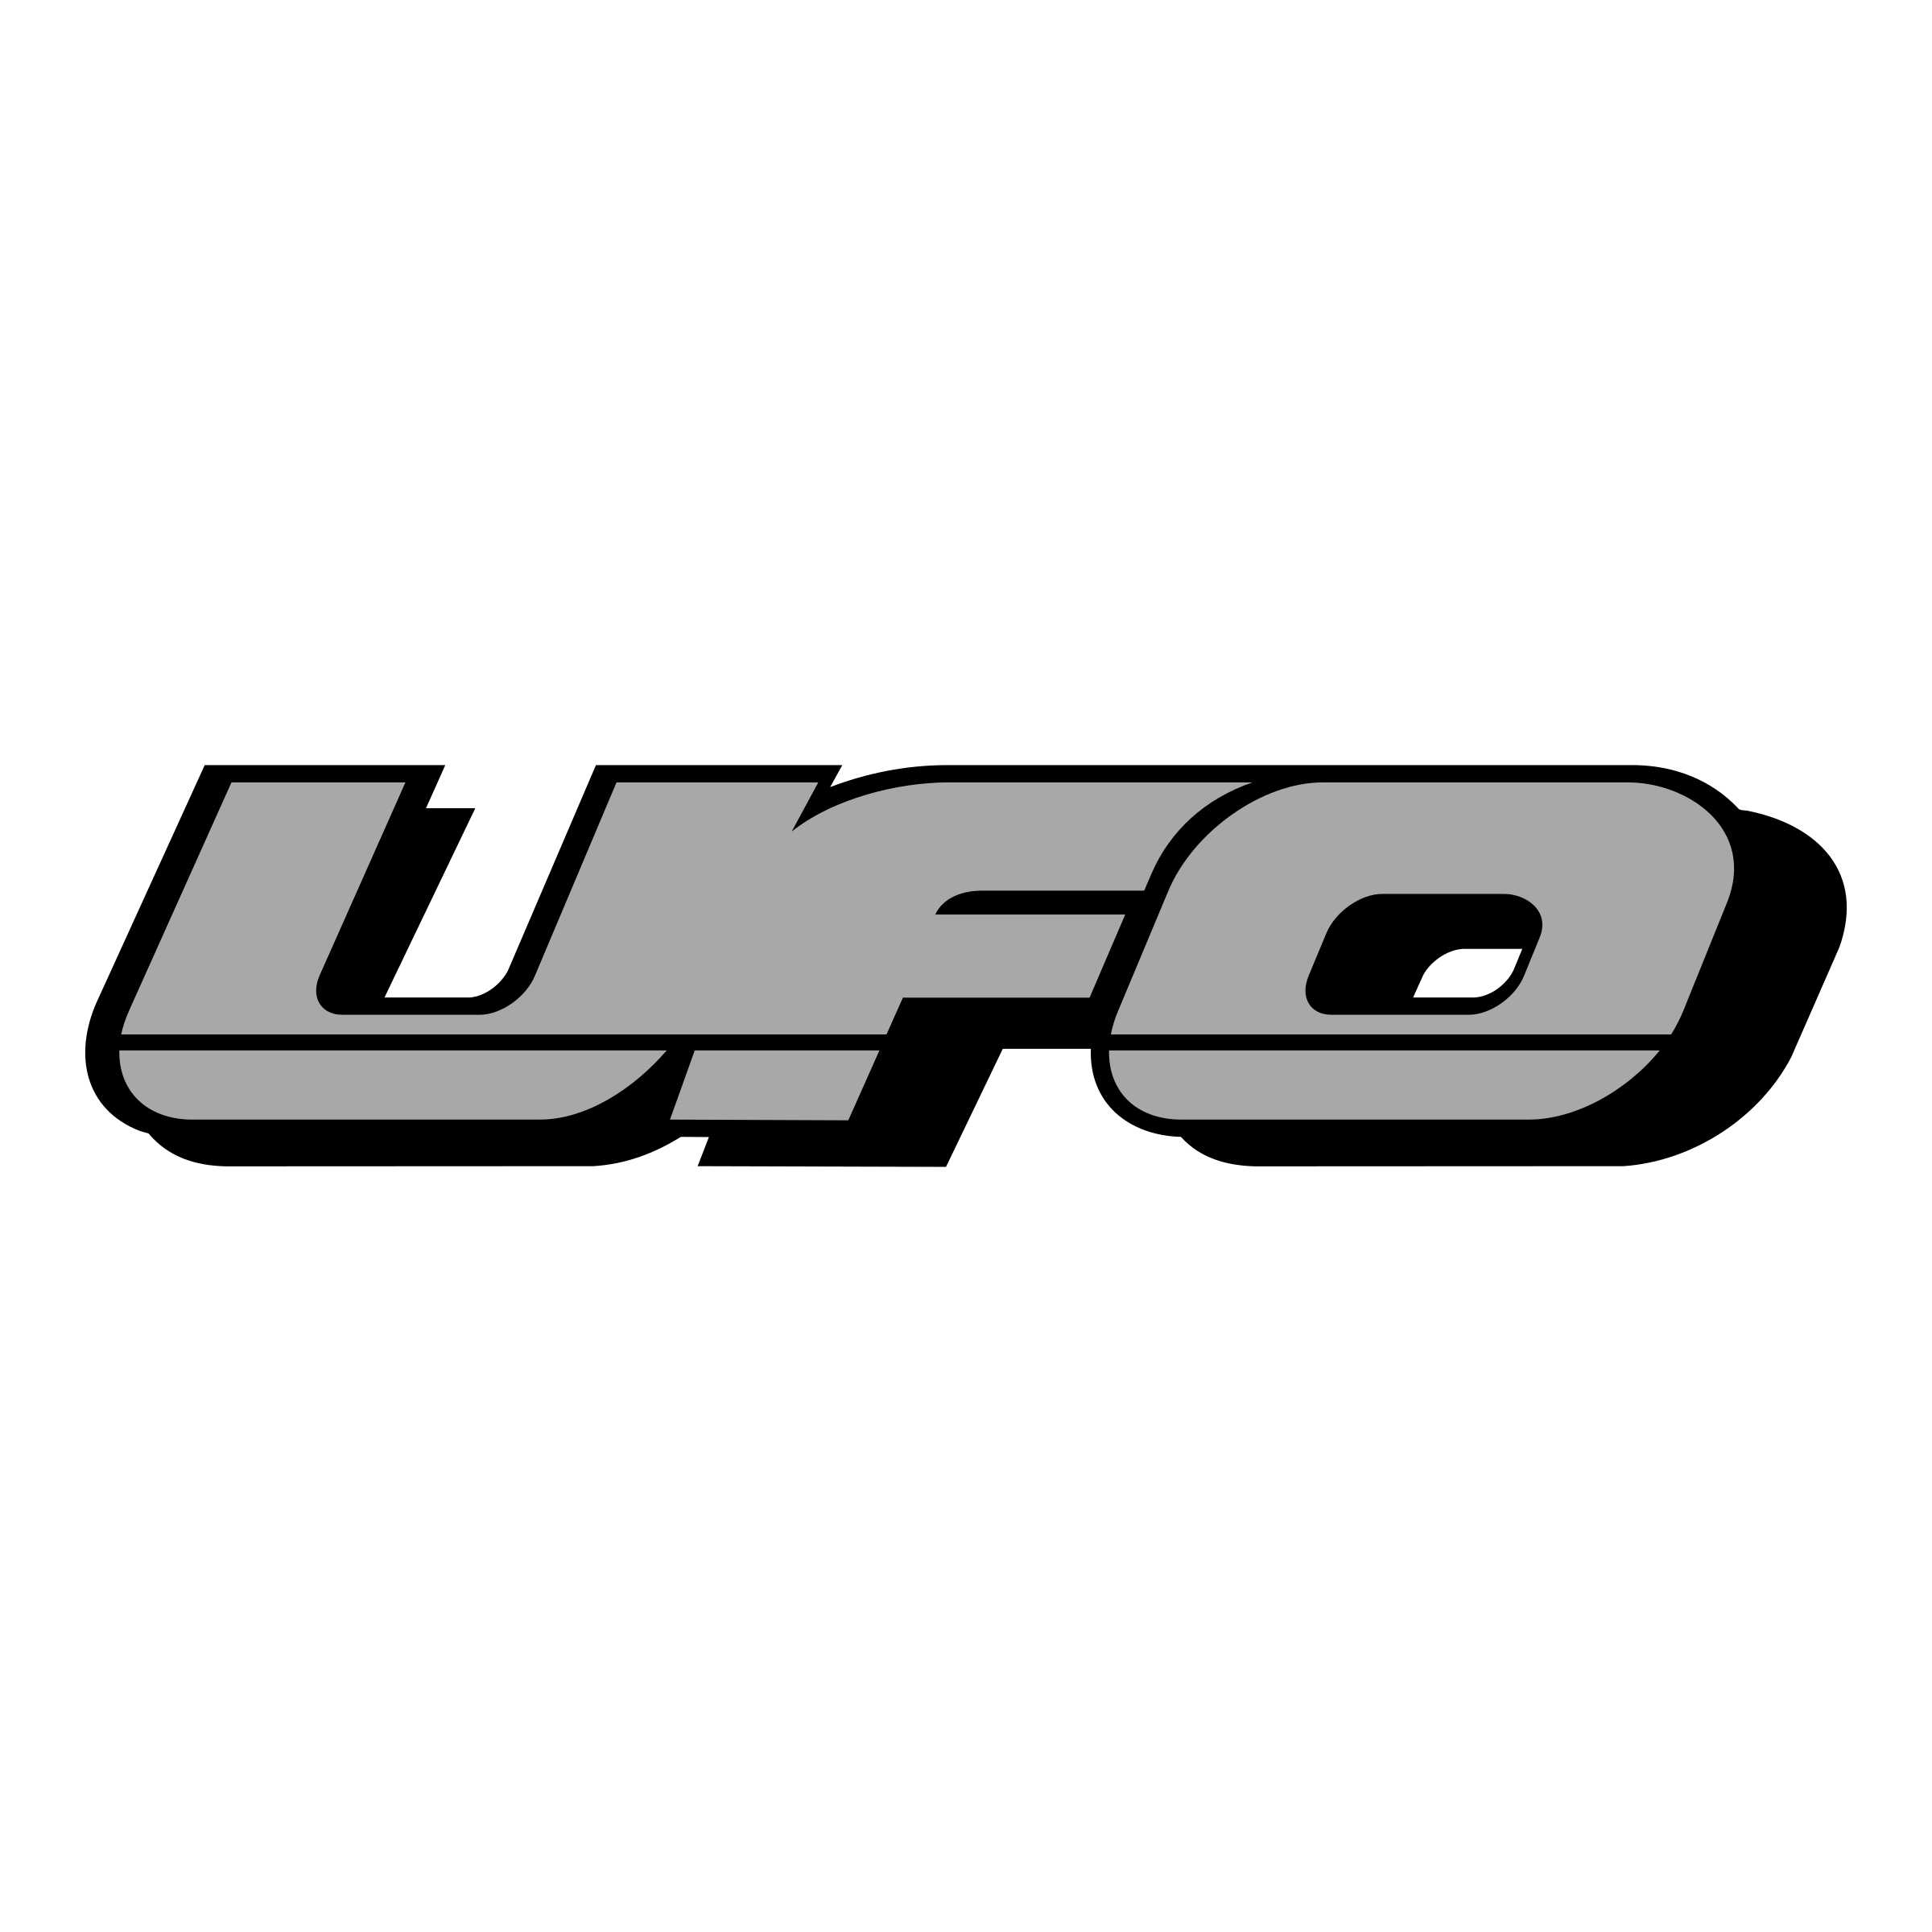 UFO Logo - UFO Logo PNG Transparent & SVG Vector - Freebie Supply